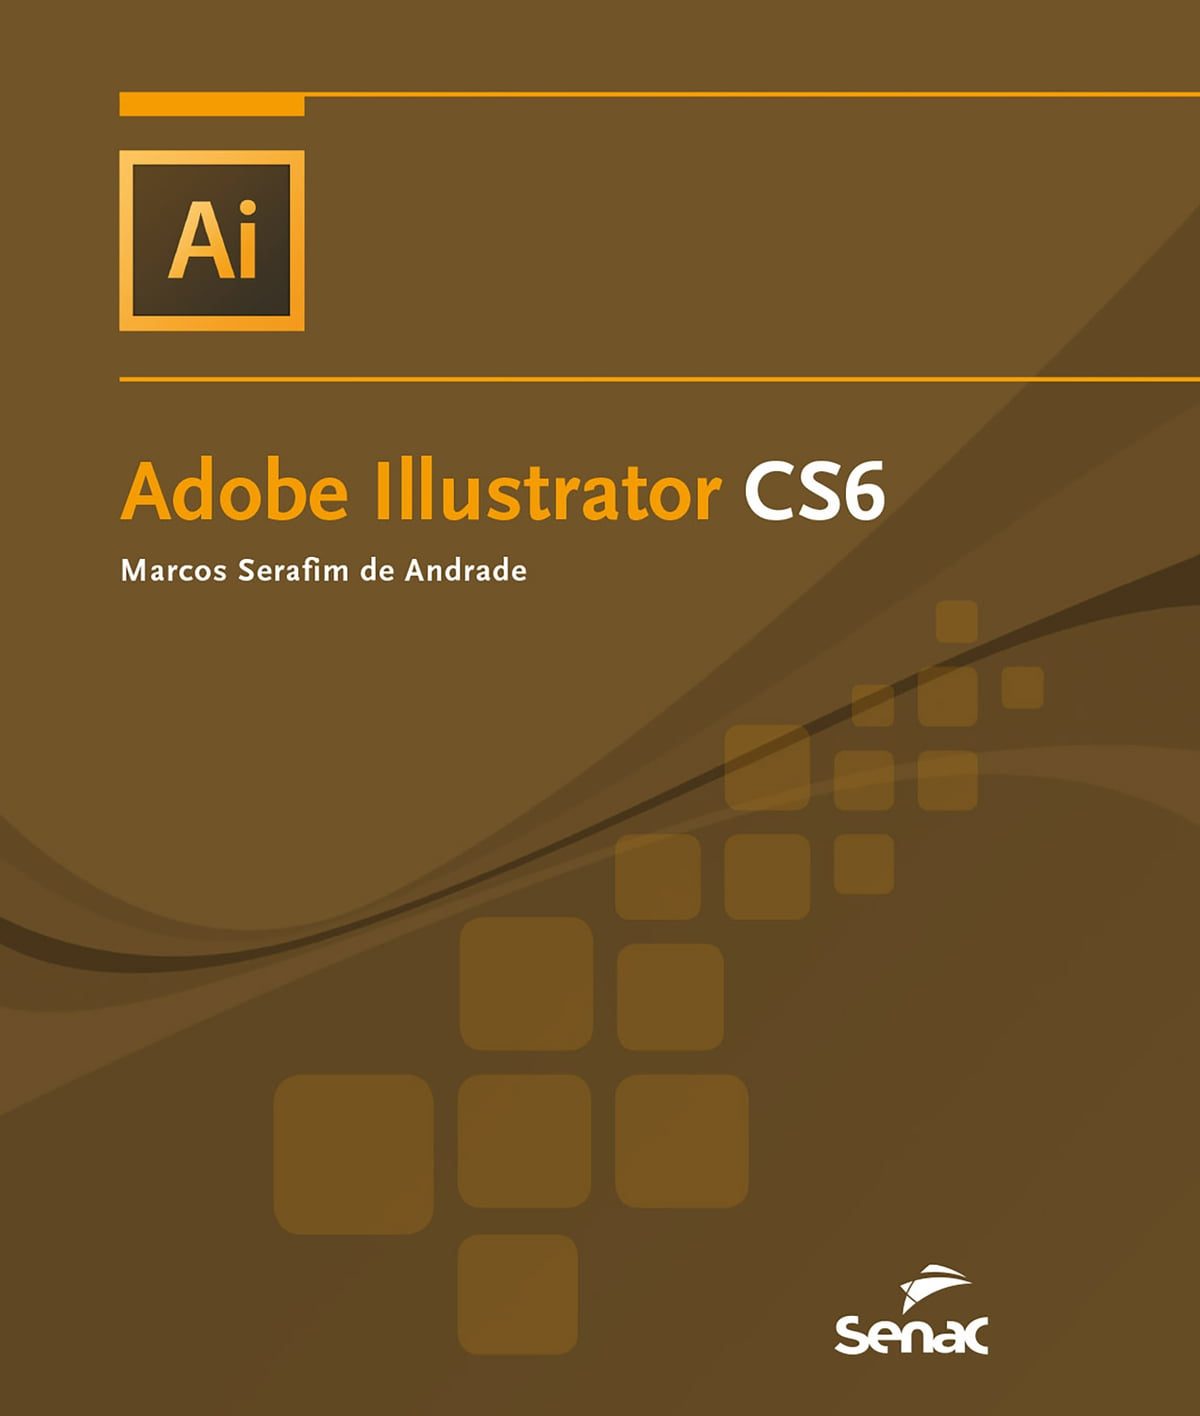 Download Adobe Illustrator CS6 with keys